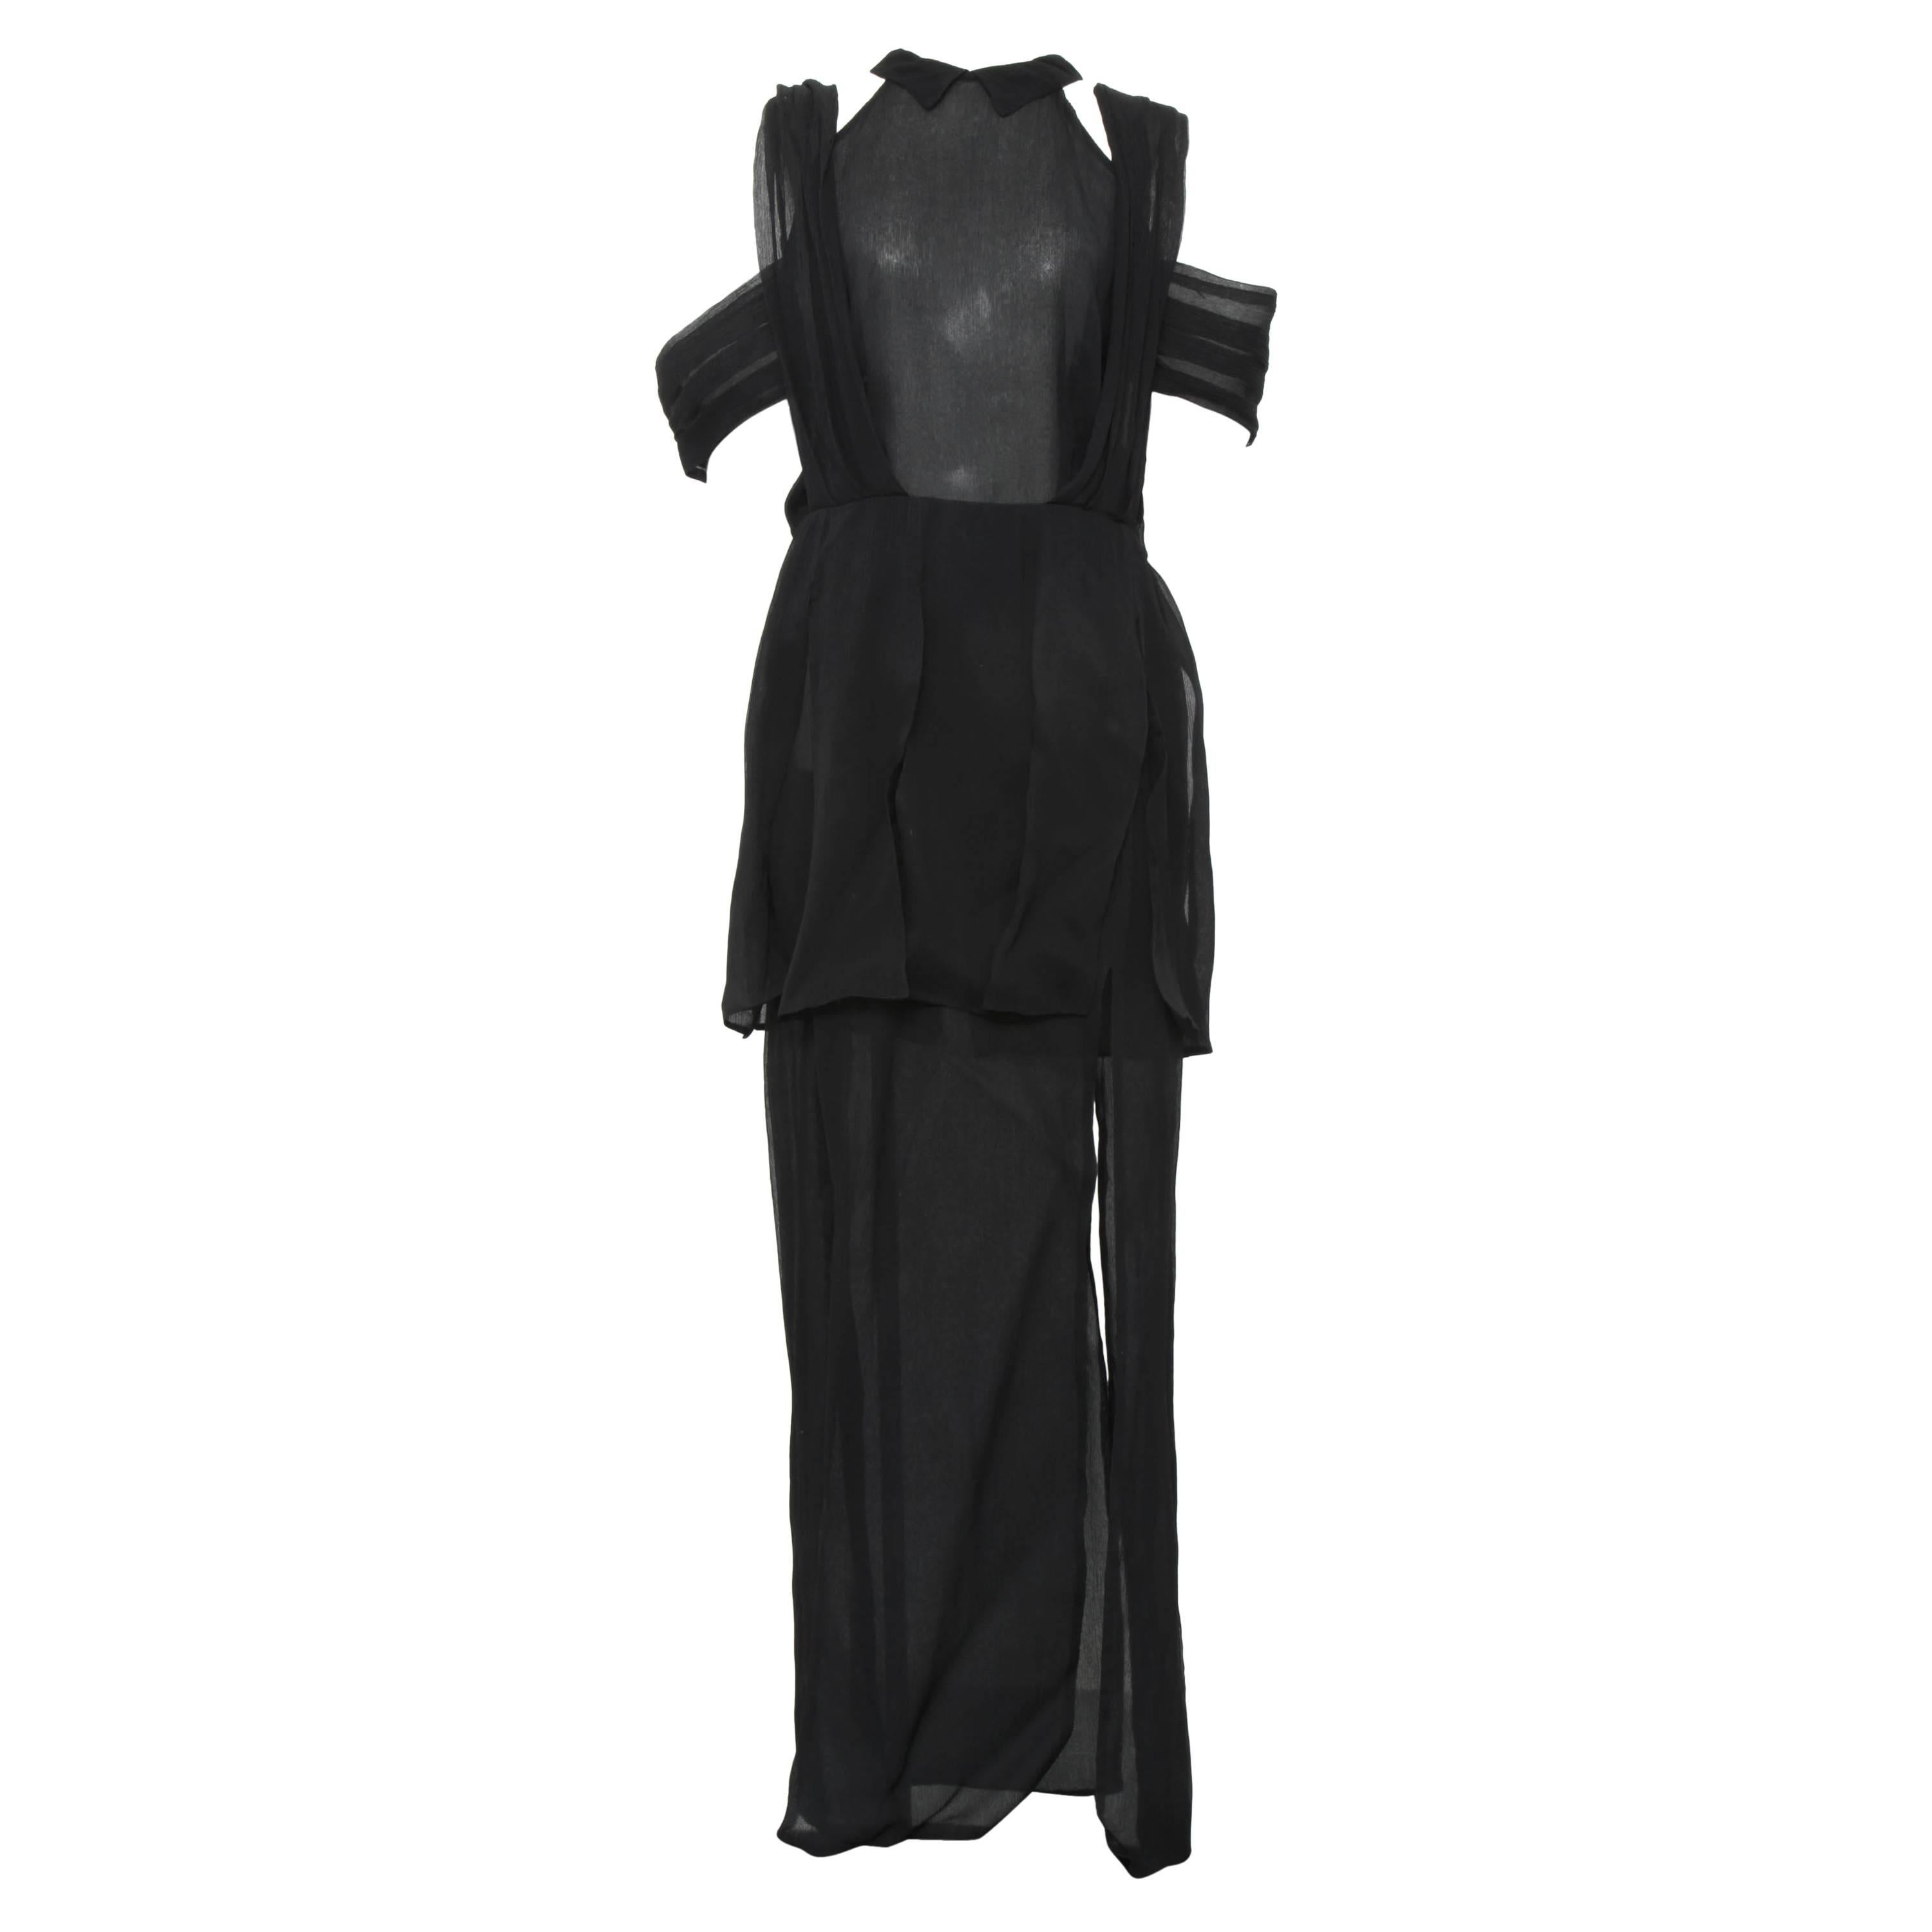 Rodarte Black See-Through Chiffon Gown Dress For Sale